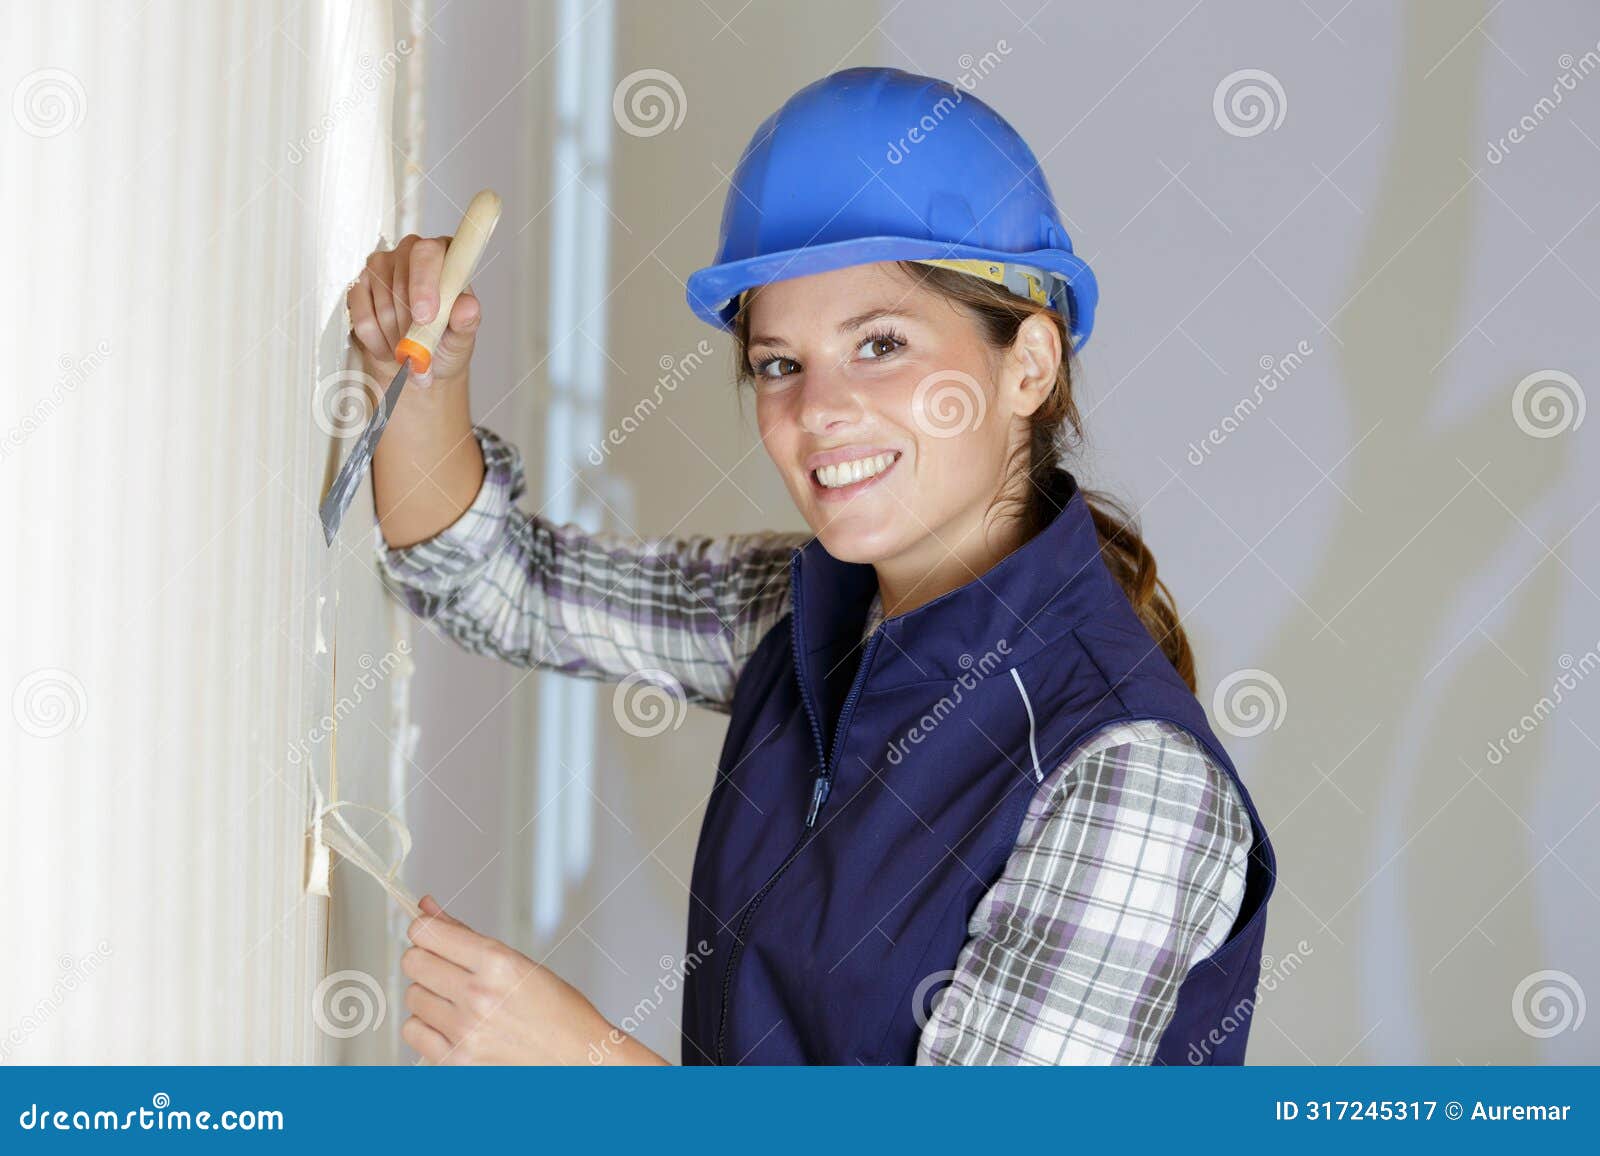 female labourer removing wallpaper in renovation property